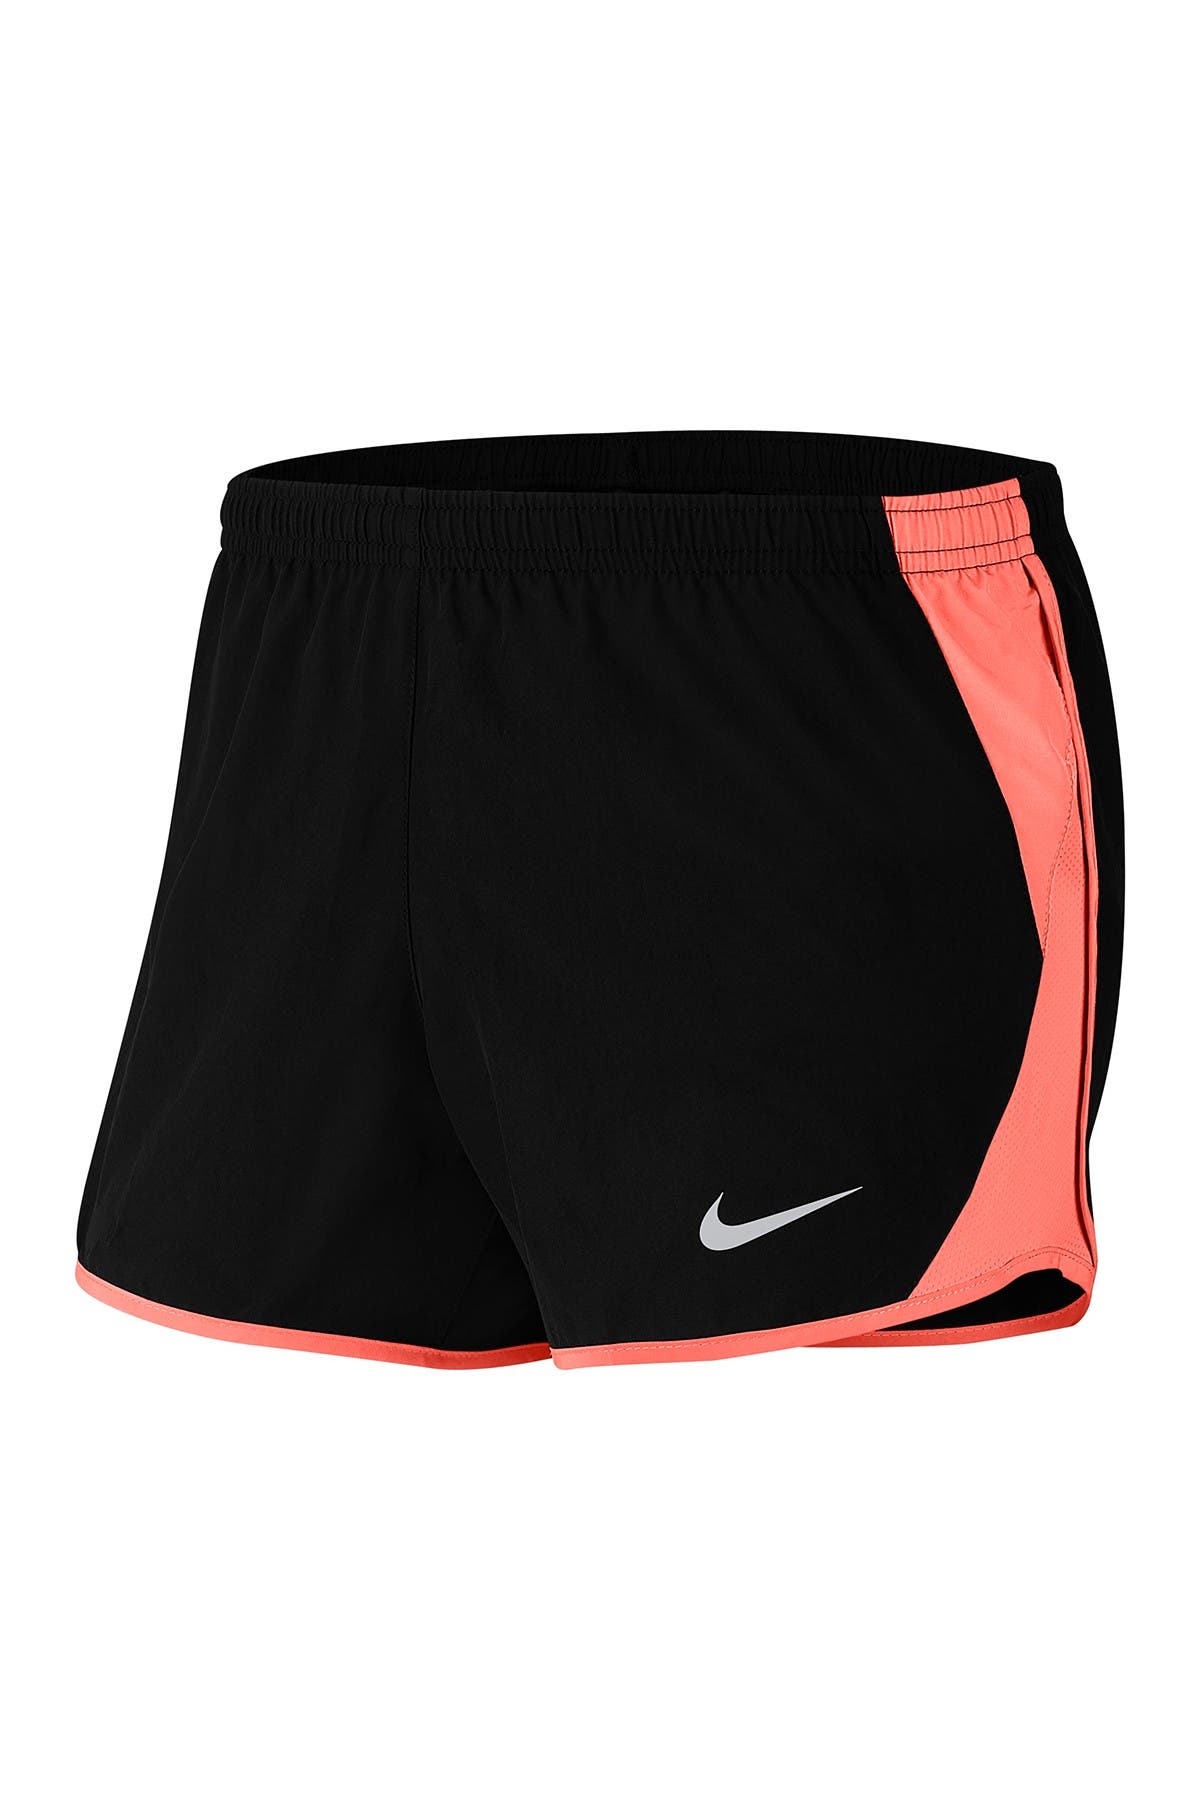 Nike 10k Dri-fit Running Shorts In Black/bright Mango